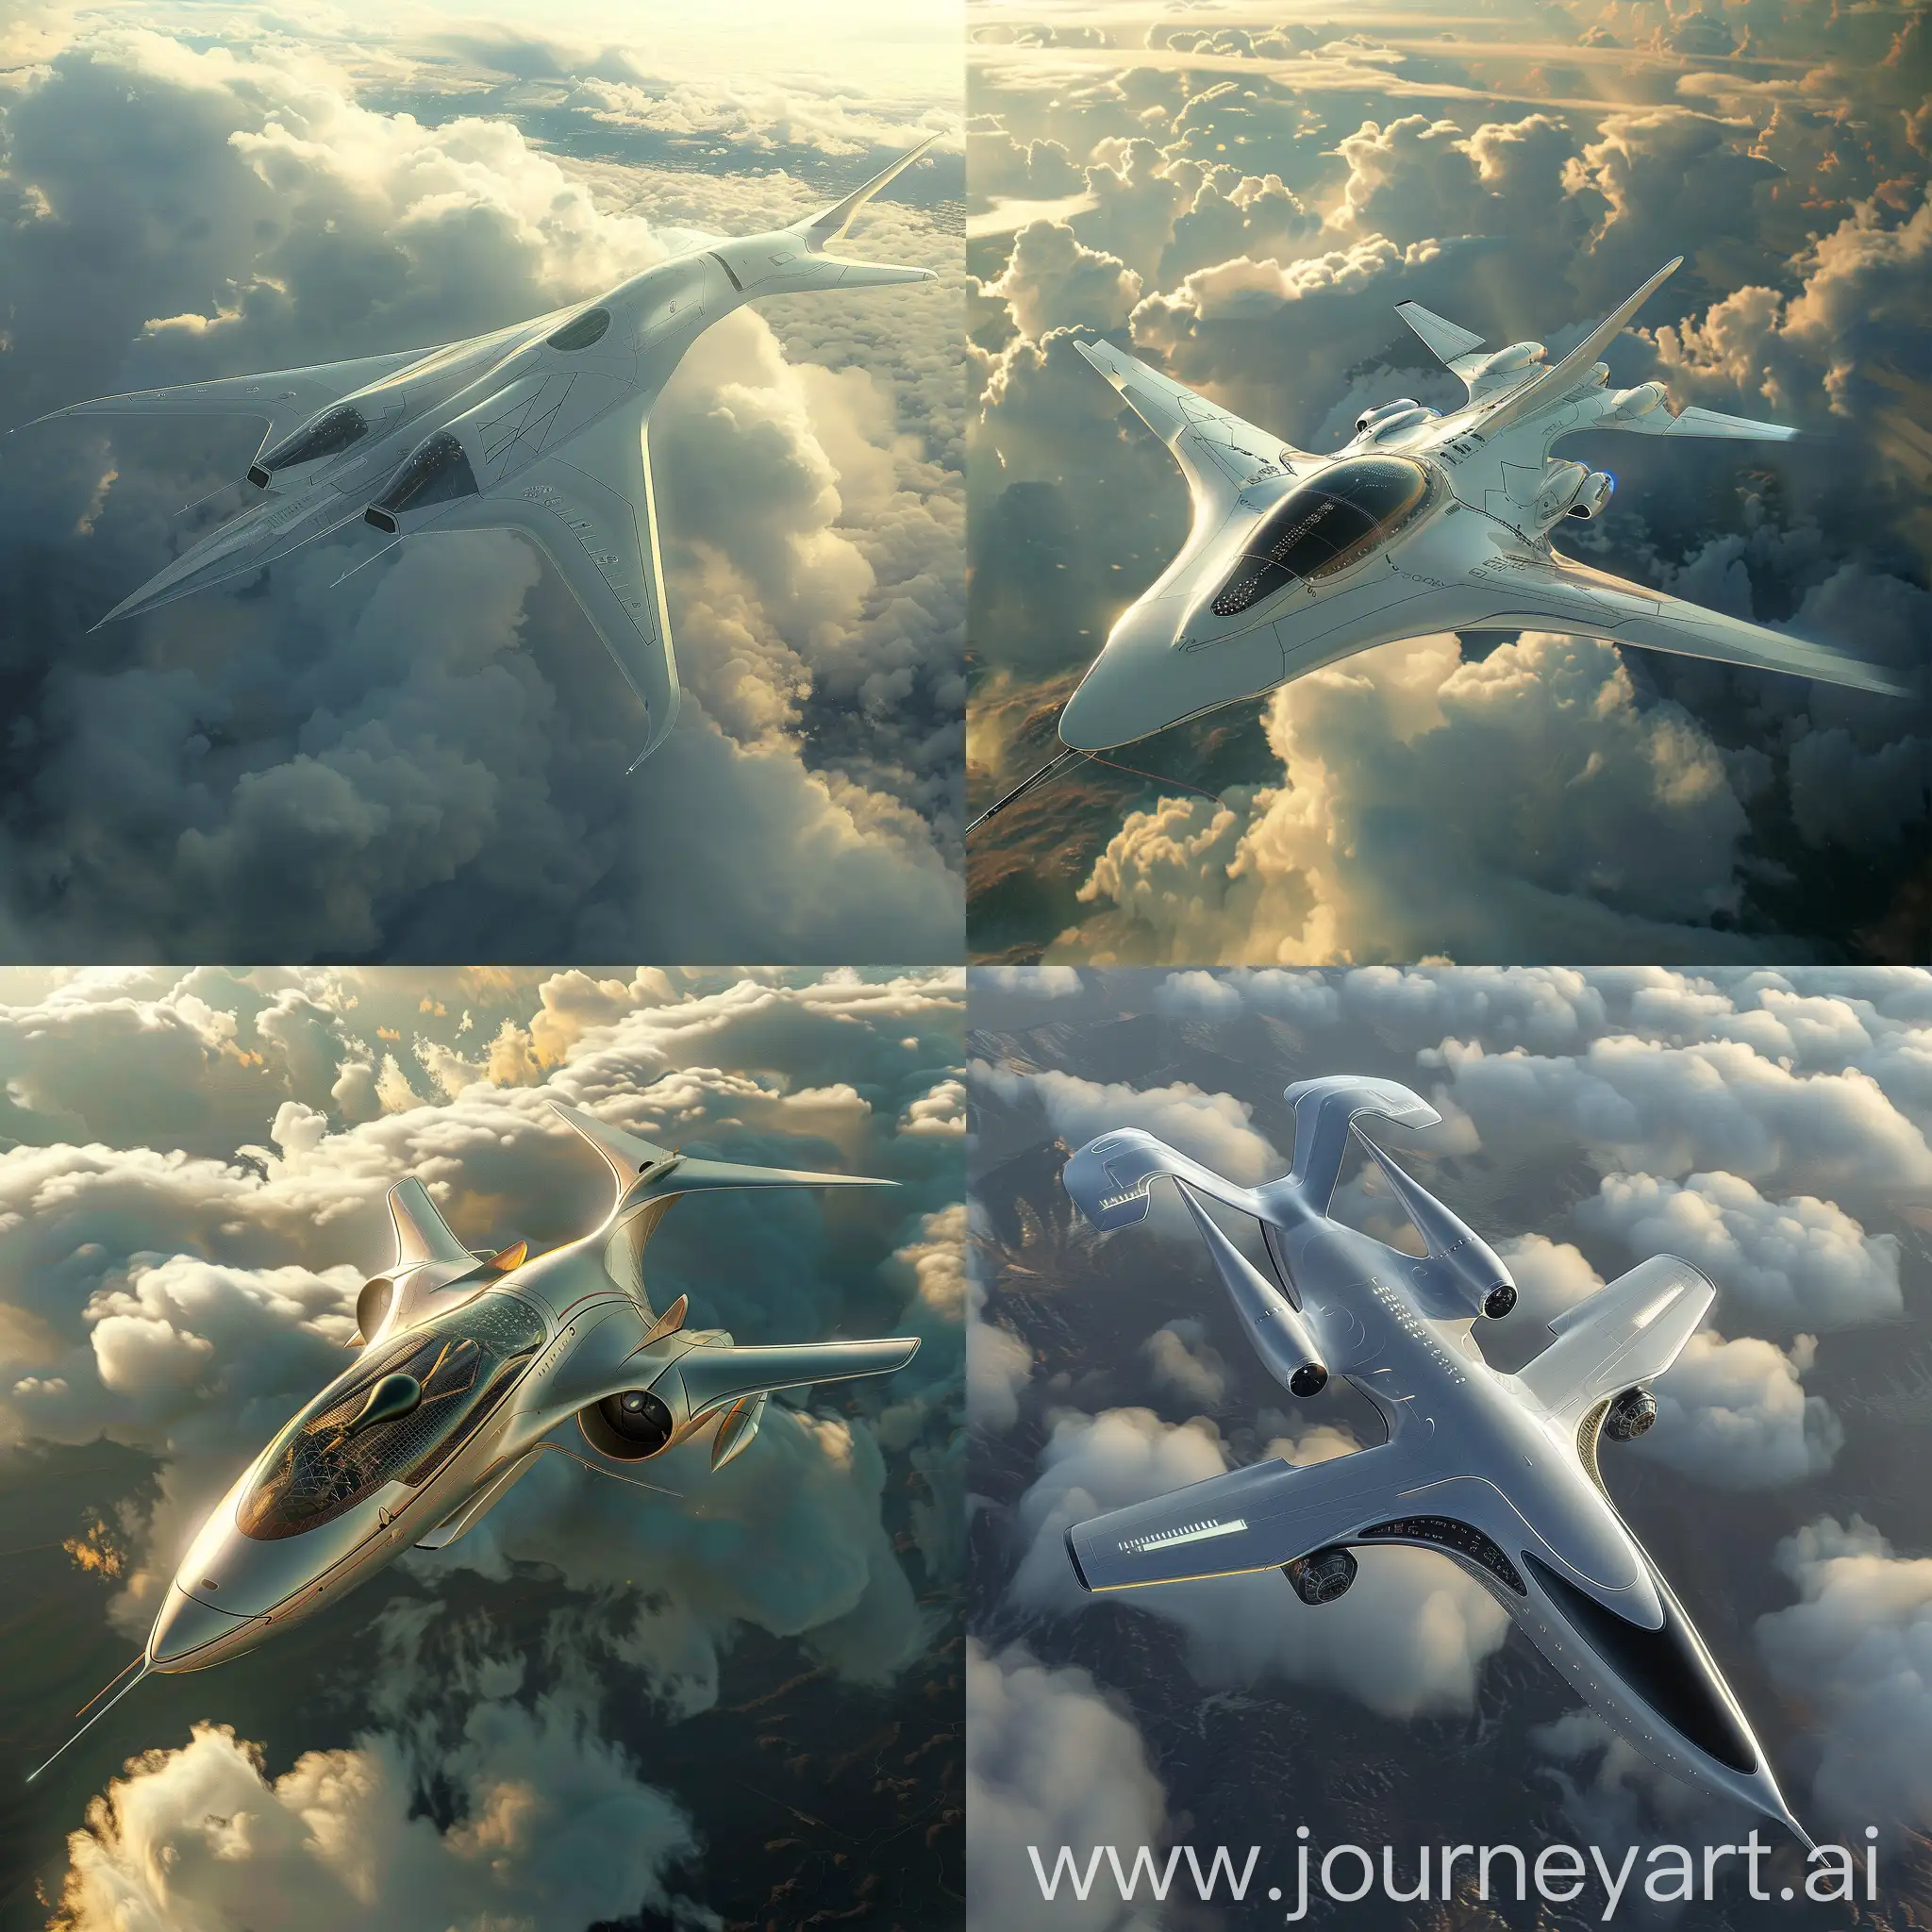 Futuristic-SciFi-Passenger-Aircraft-with-Advanced-Technology